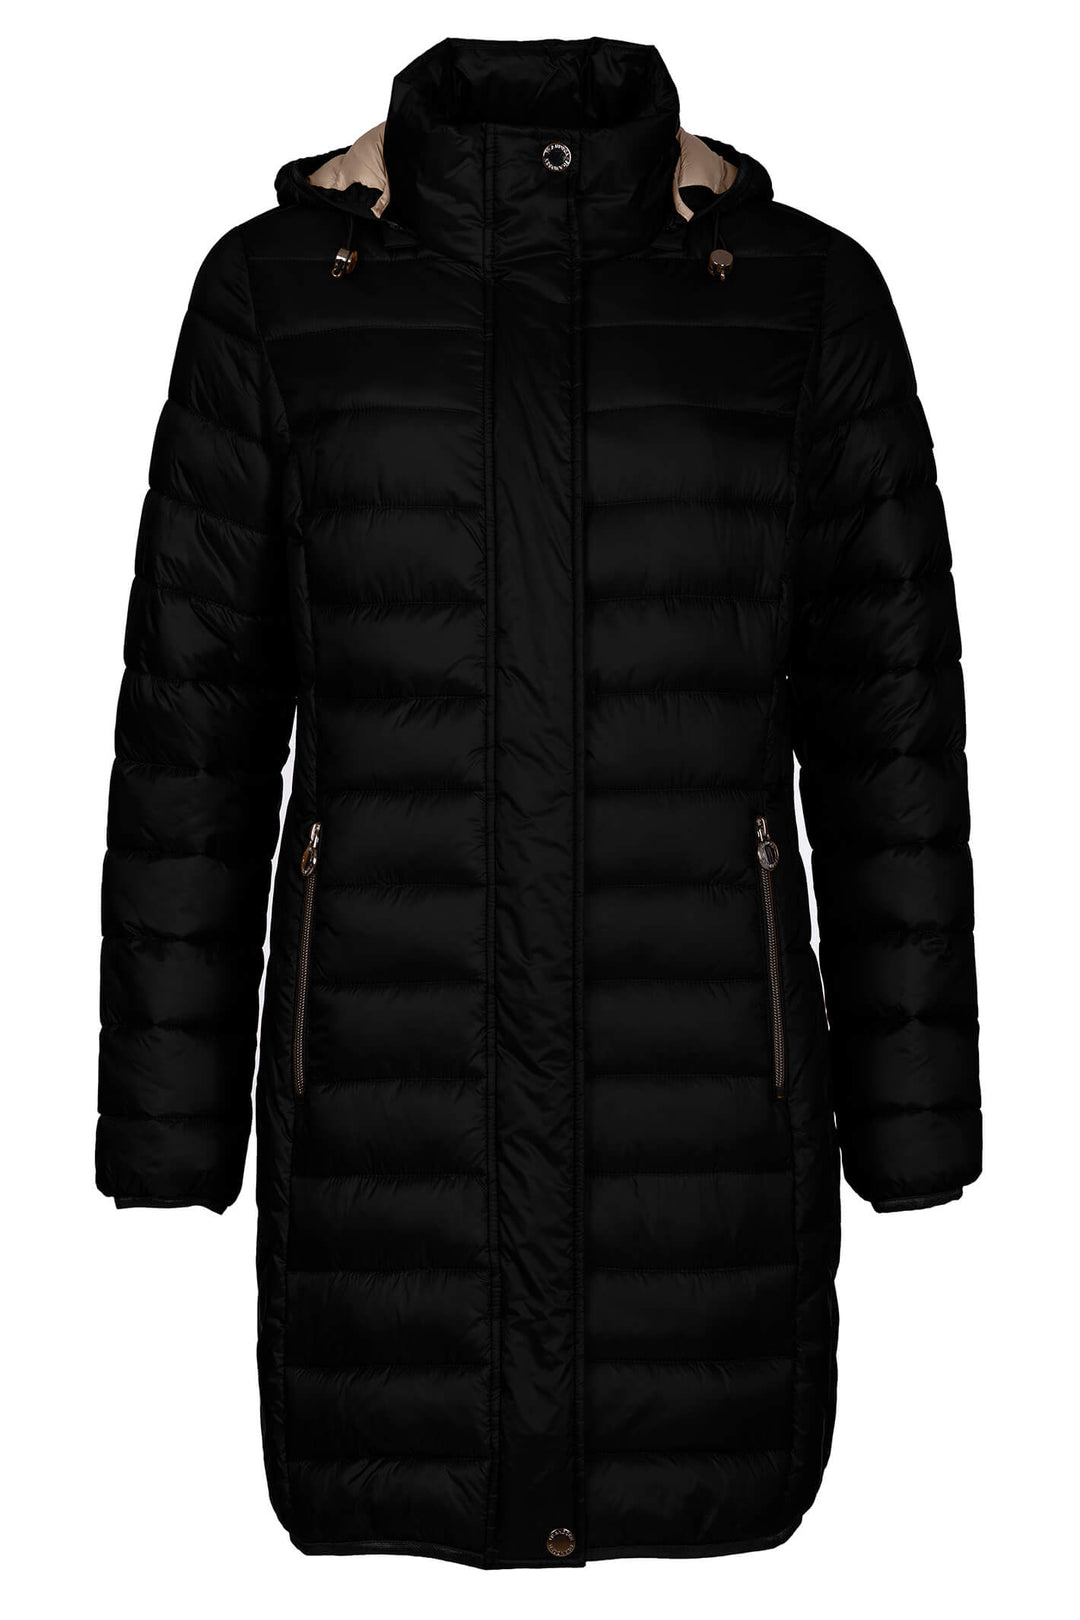 Fransen 327-588-90 Black Zip Front Padded Coat With Hood - Dotique